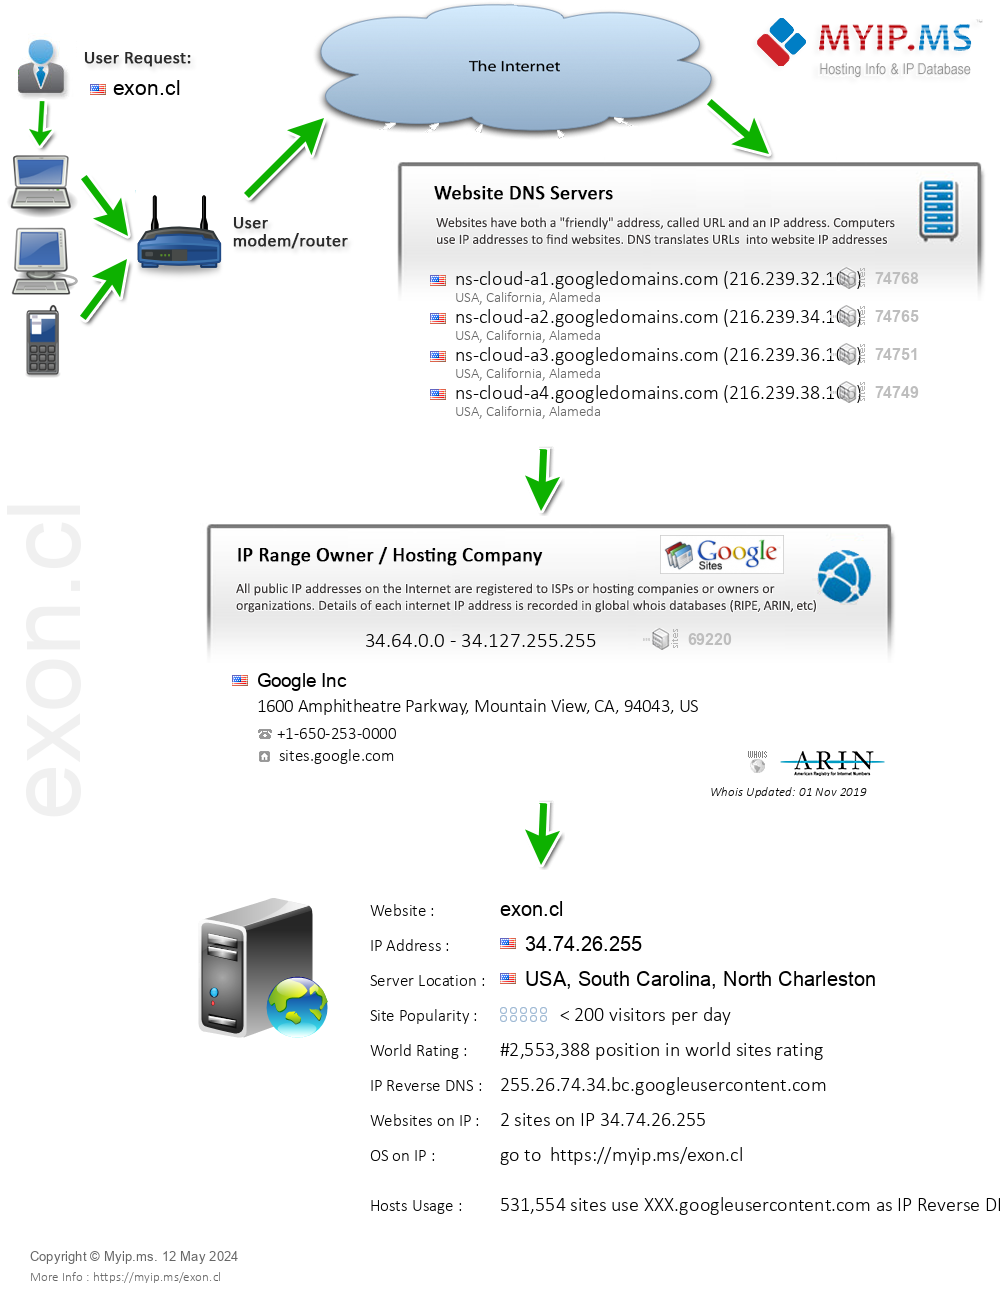 Exon.cl - Website Hosting Visual IP Diagram